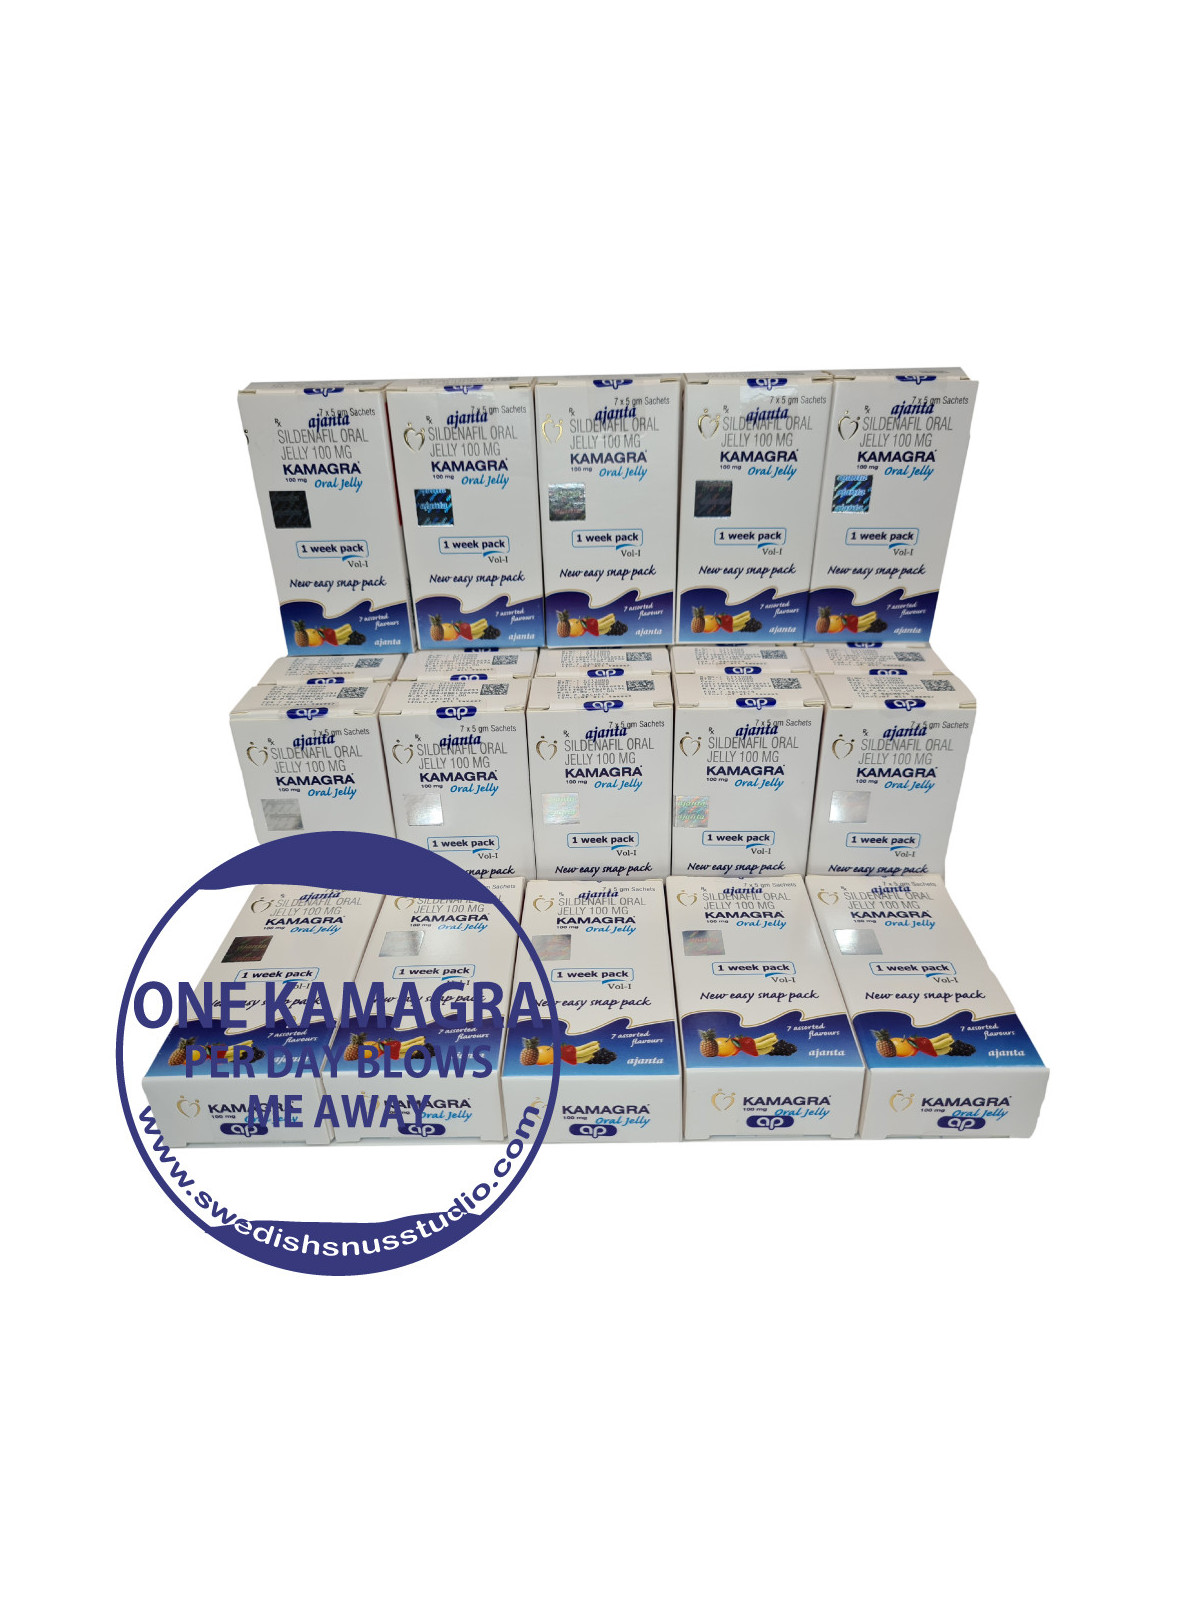 Kamagra Oral Jelly Vol 4 Sildenafil 100 Mg at Rs 246/packet